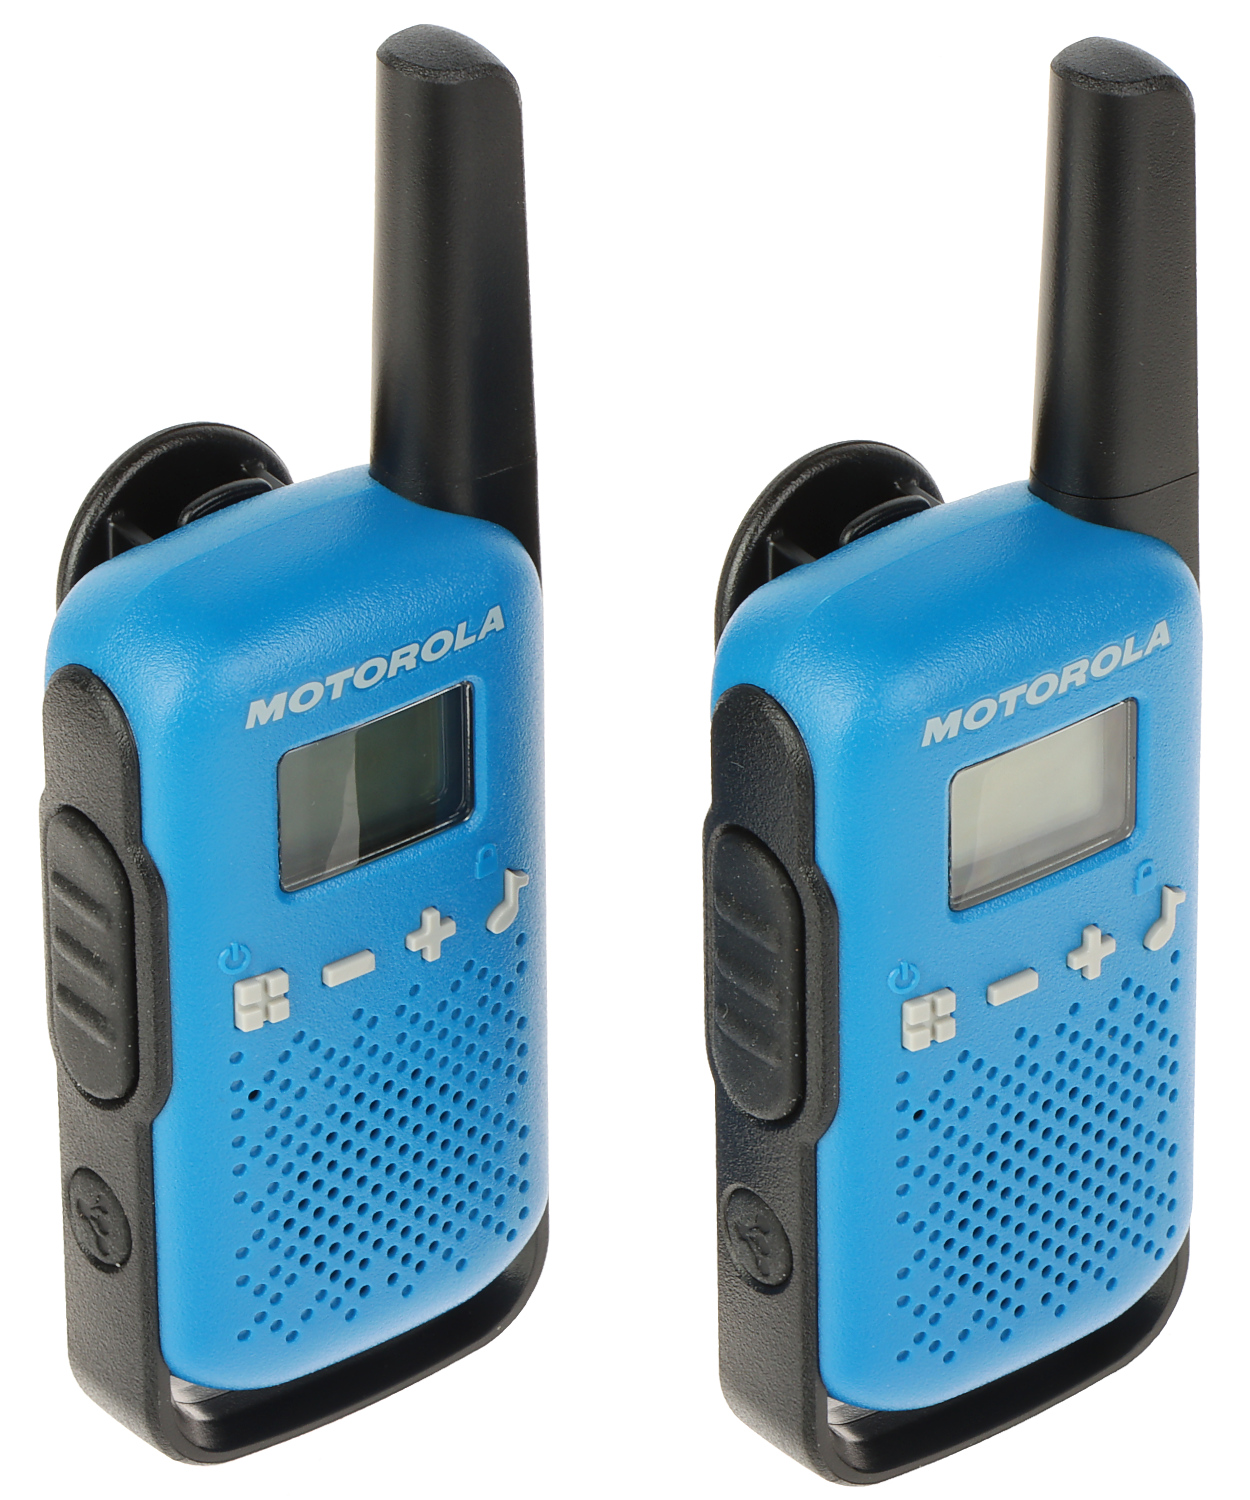 SET OF 2 PMR RADIOS MOTOROLA-T42/BLUE 446.1 MHz ... 44... - Radio  Communication - Delta